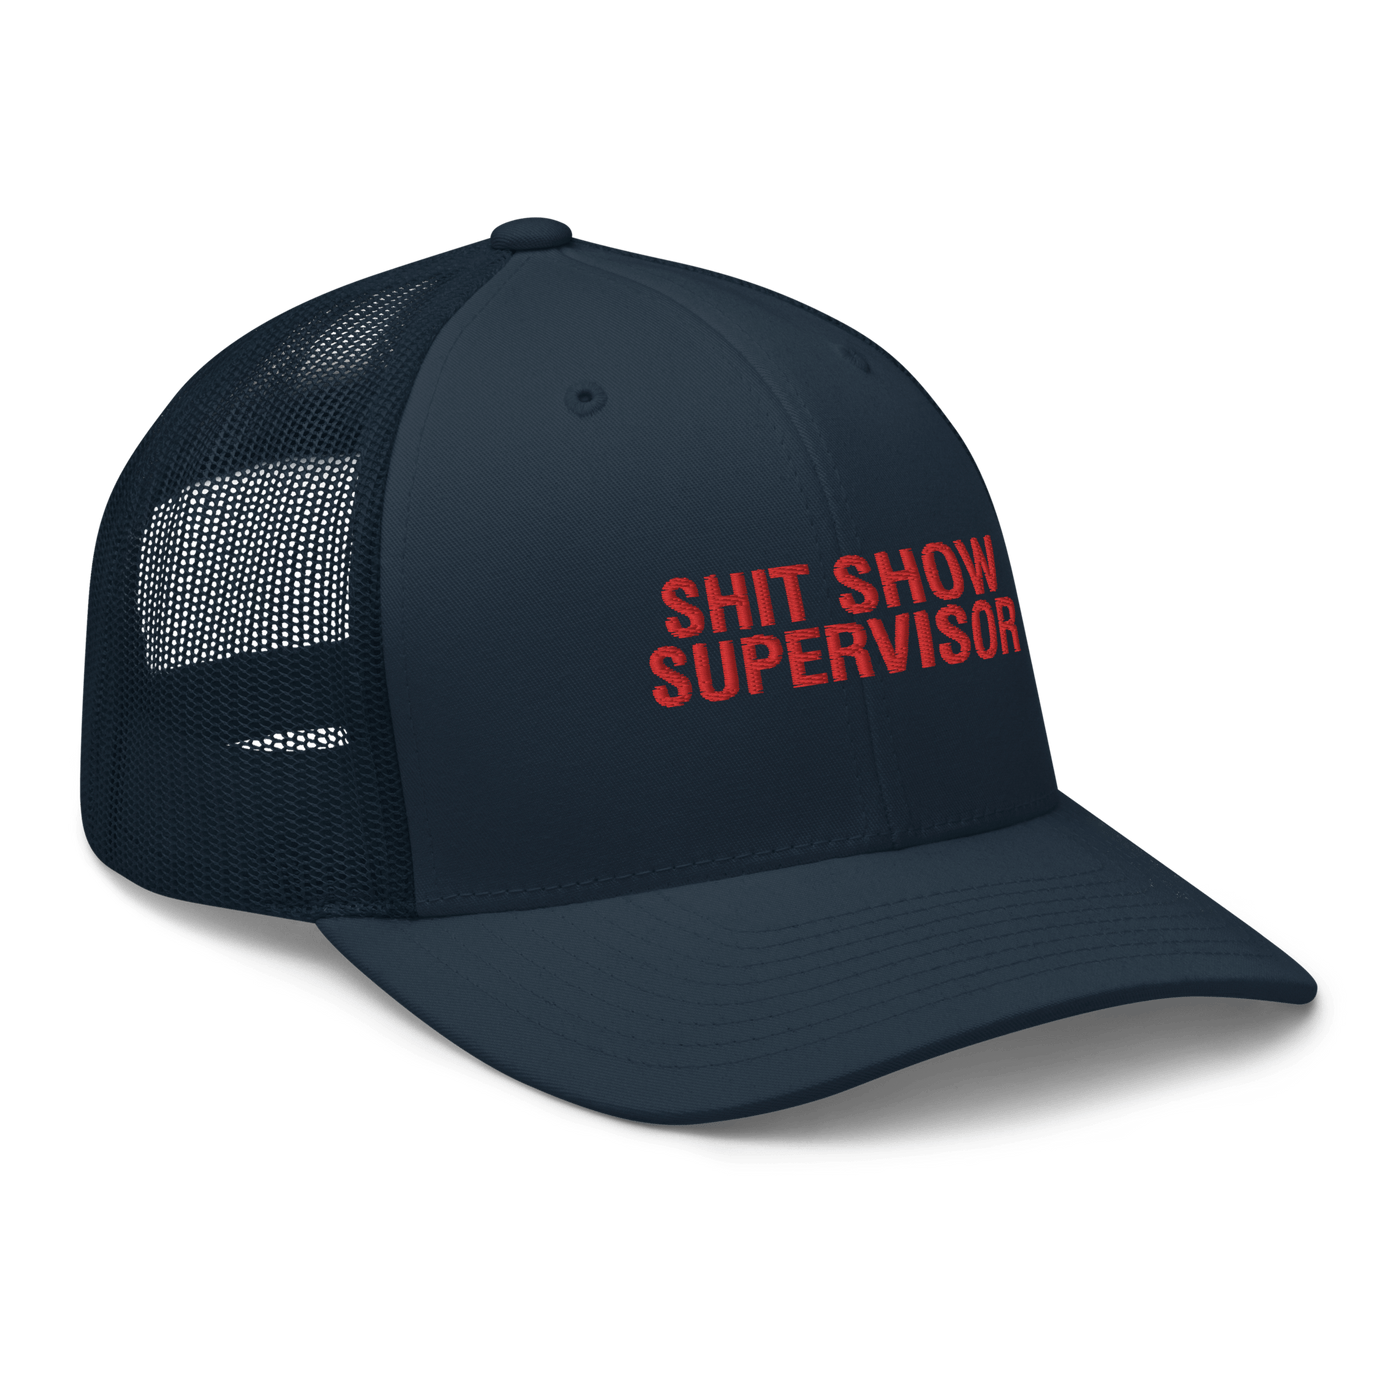 Shit Show Supervisor Trucker Cap - Navy - Just Another Cap Store